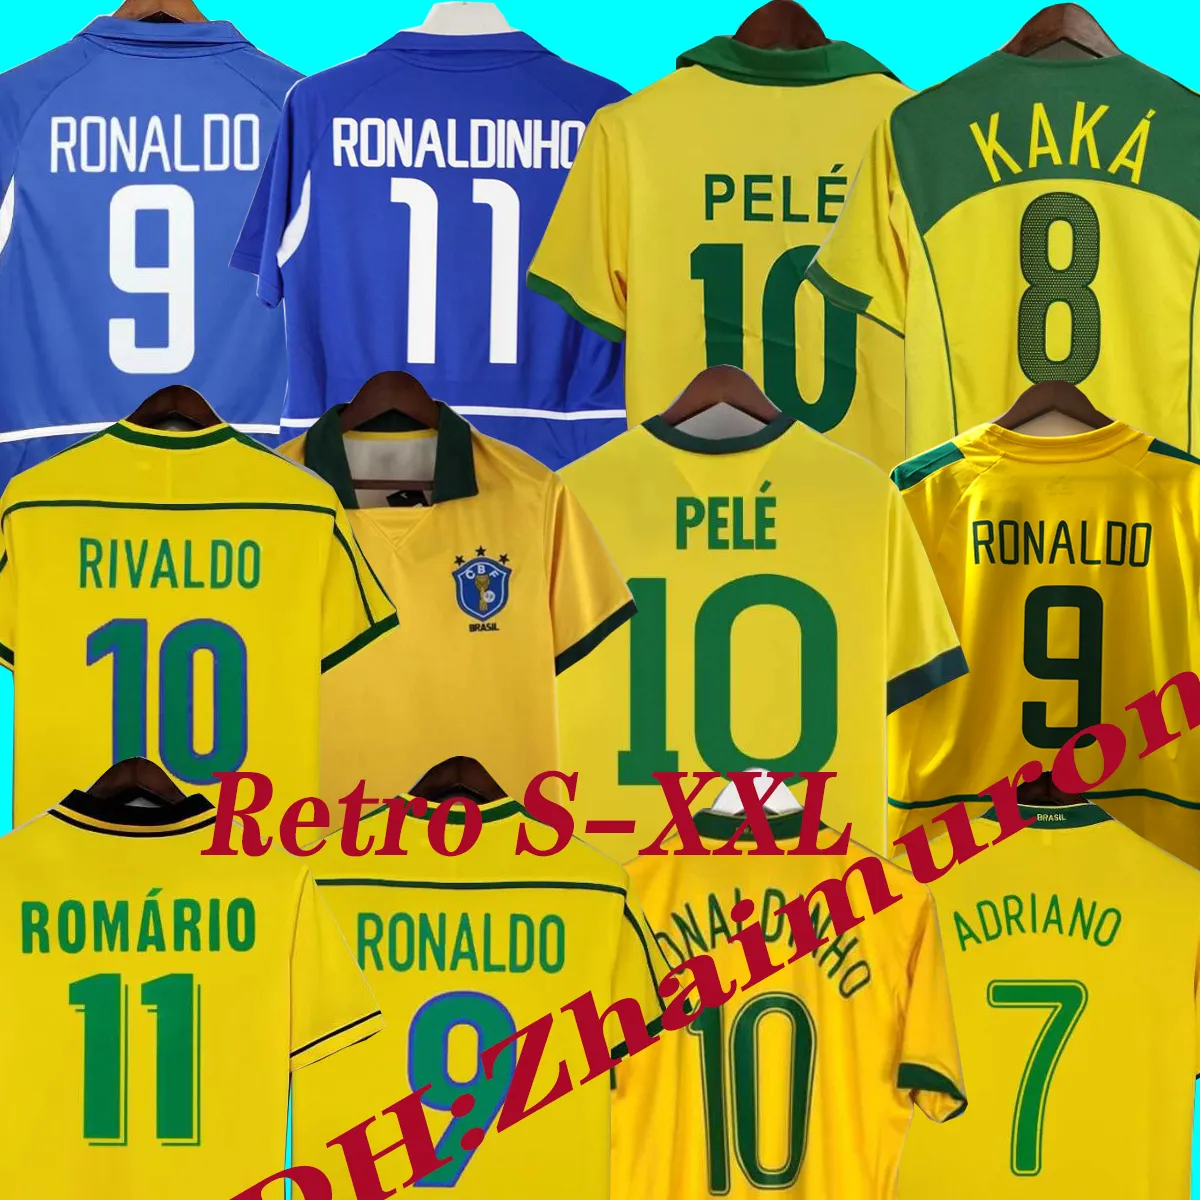 1957 1970 1998 Brasil Soccer Jerseys 2002 Retro Shirts Carlos Romario Ronaldinho 2004 Camisa de Futebol 1994 Brasils 2006 1988 Rivaldo Adriano Joelinton Football